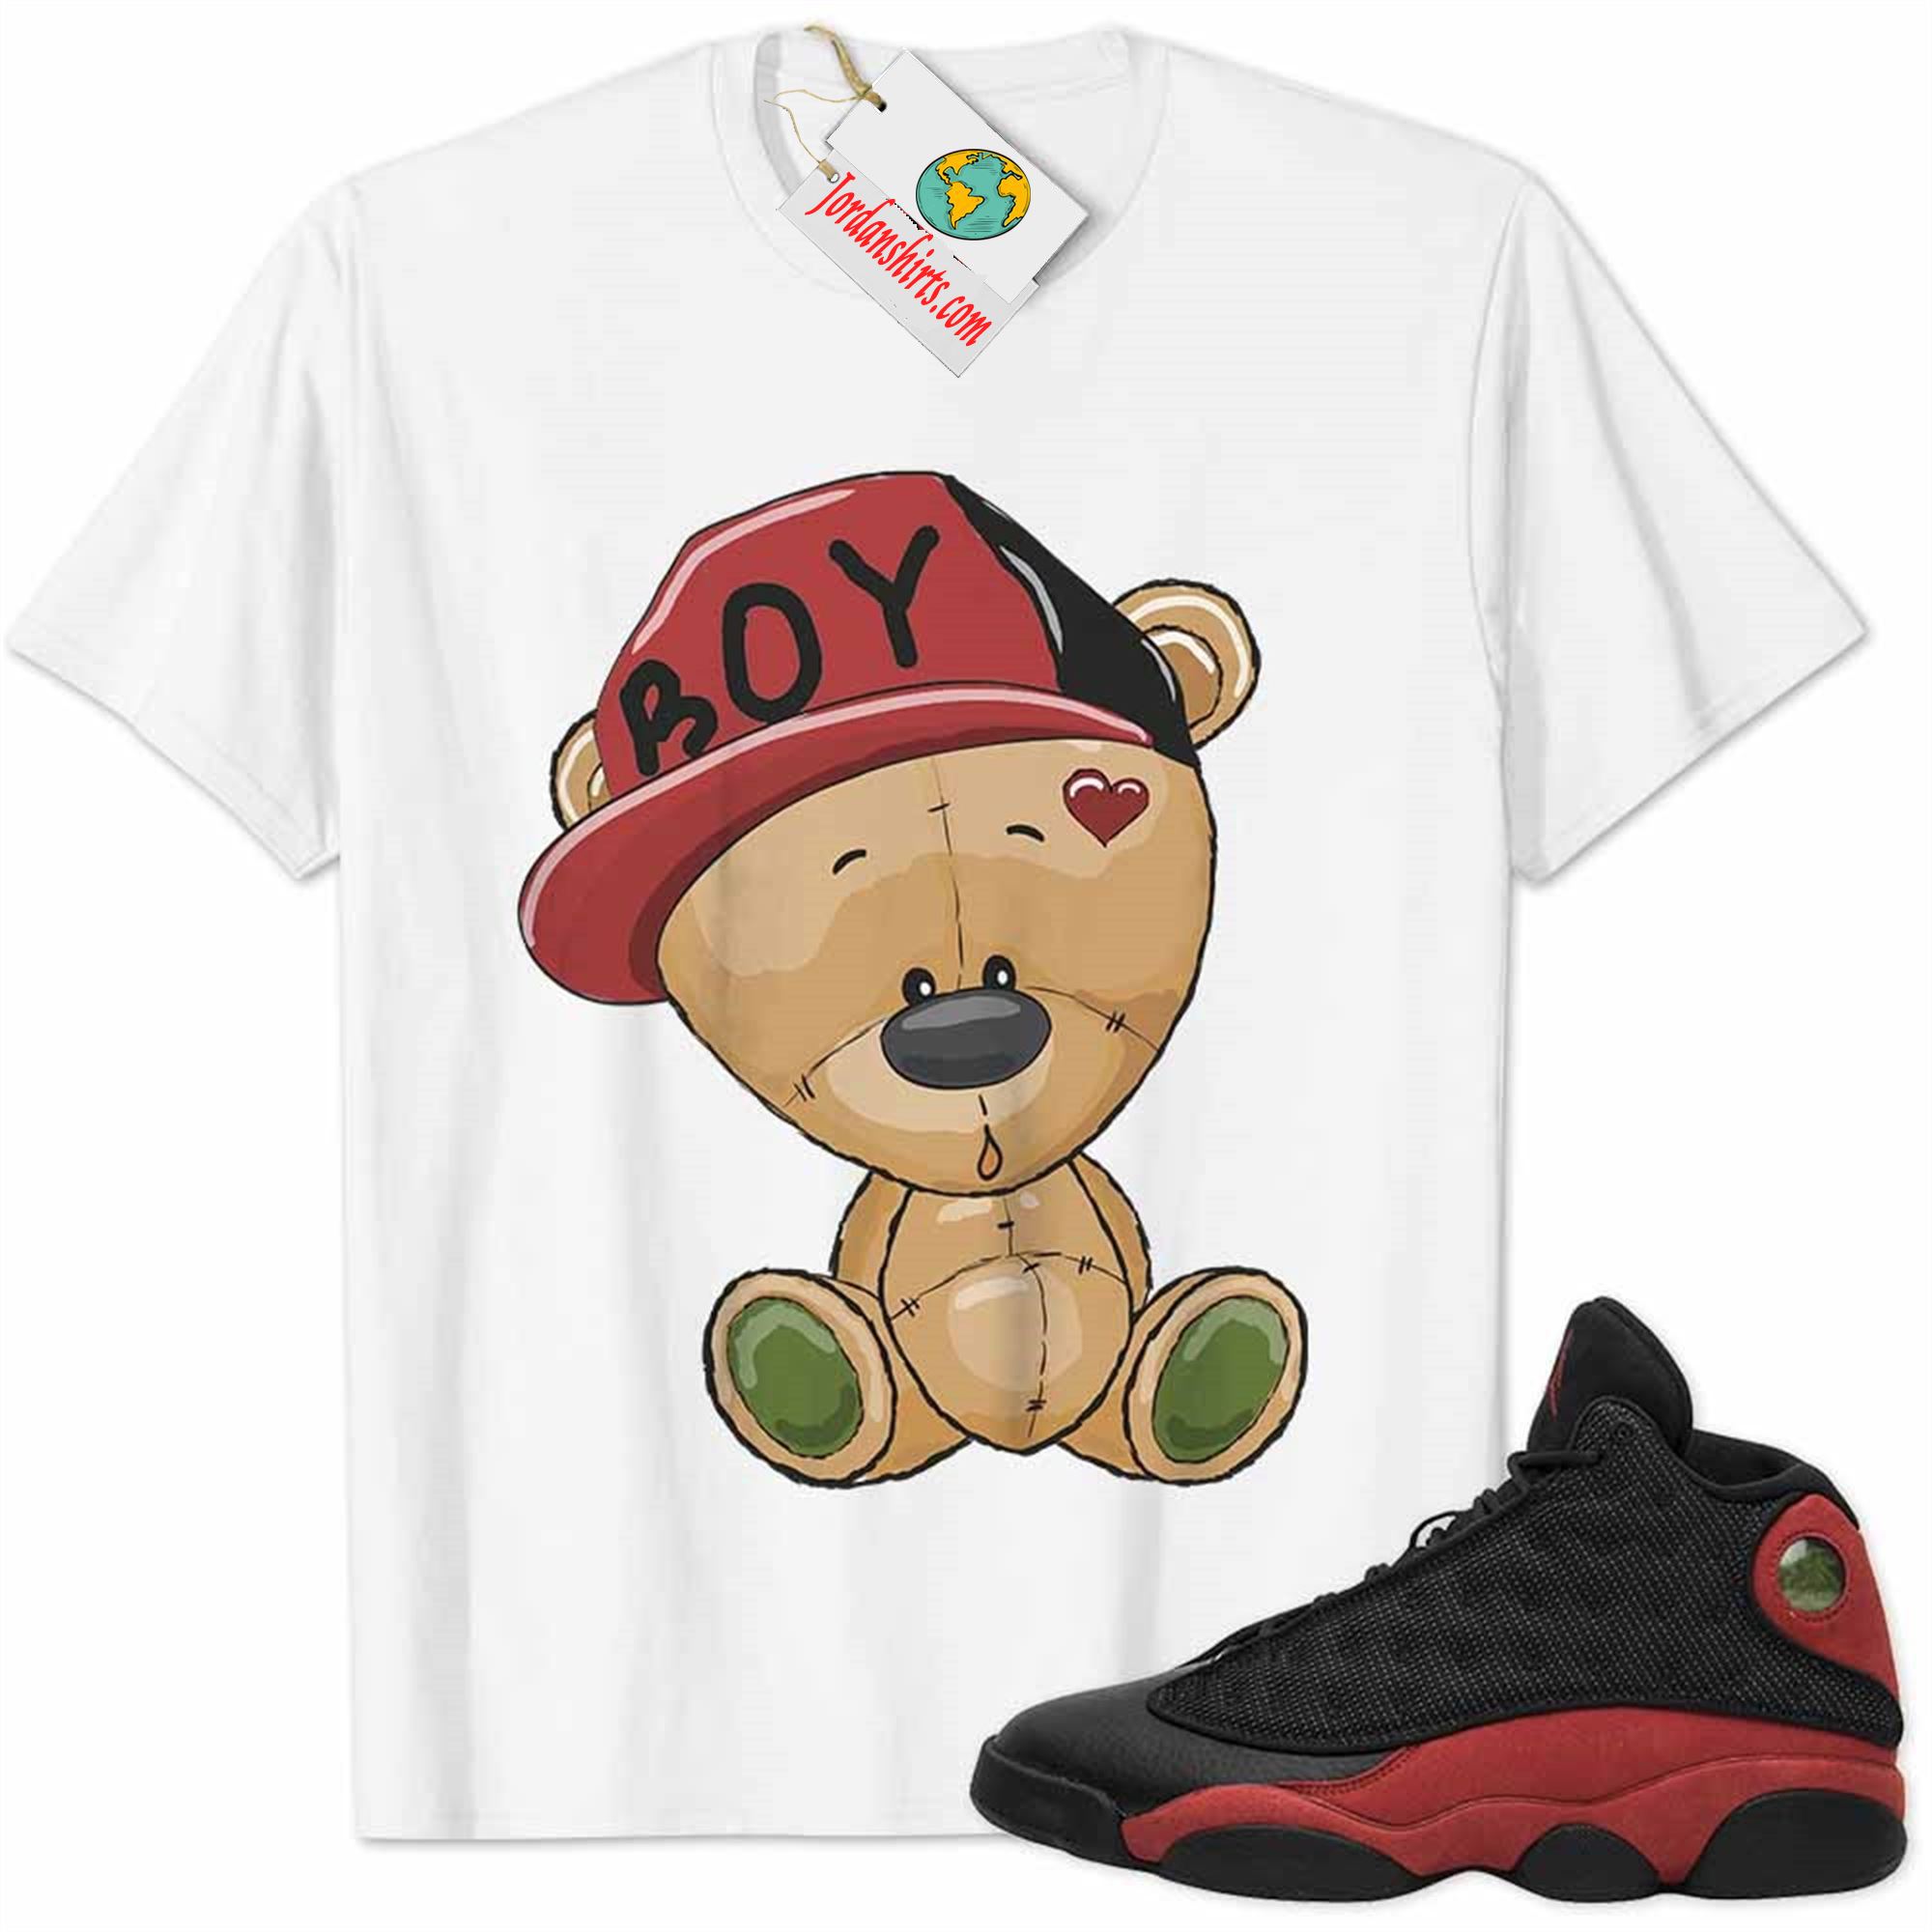 Jordan 13 Shirt, Jordan 13 Bred Shirt Cute Baby Teddy Bear White Full Size Up To 5xl